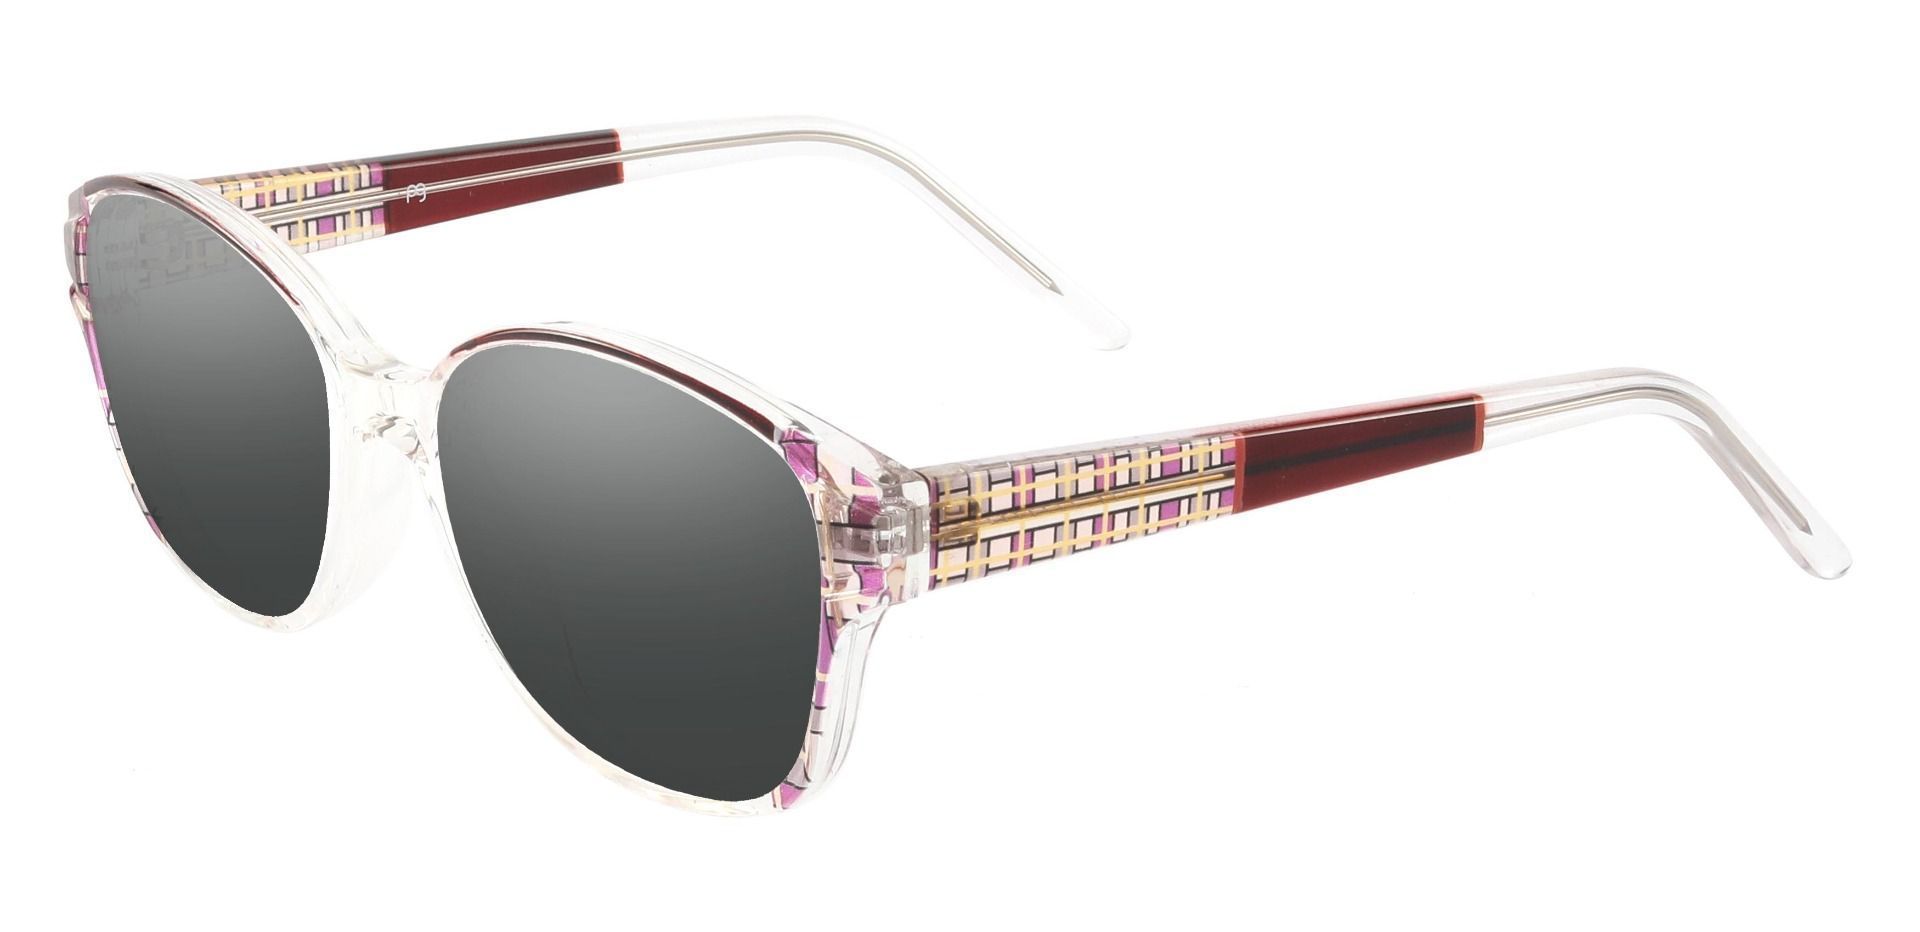 Moira Oval Progressive Sunglasses - Pink Frame With Gray Lenses